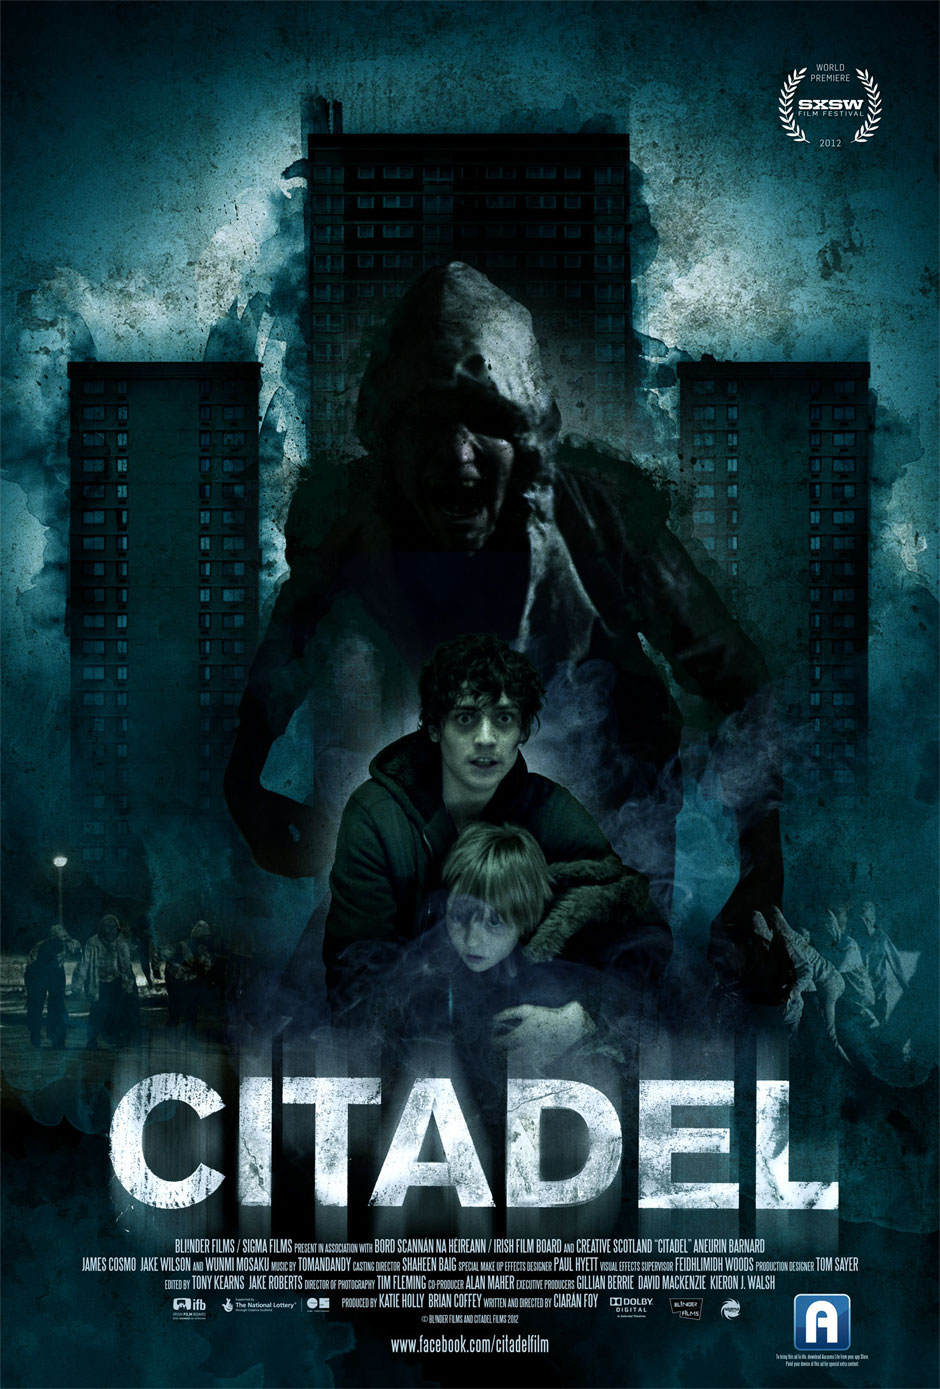 Citadel 2012 movie